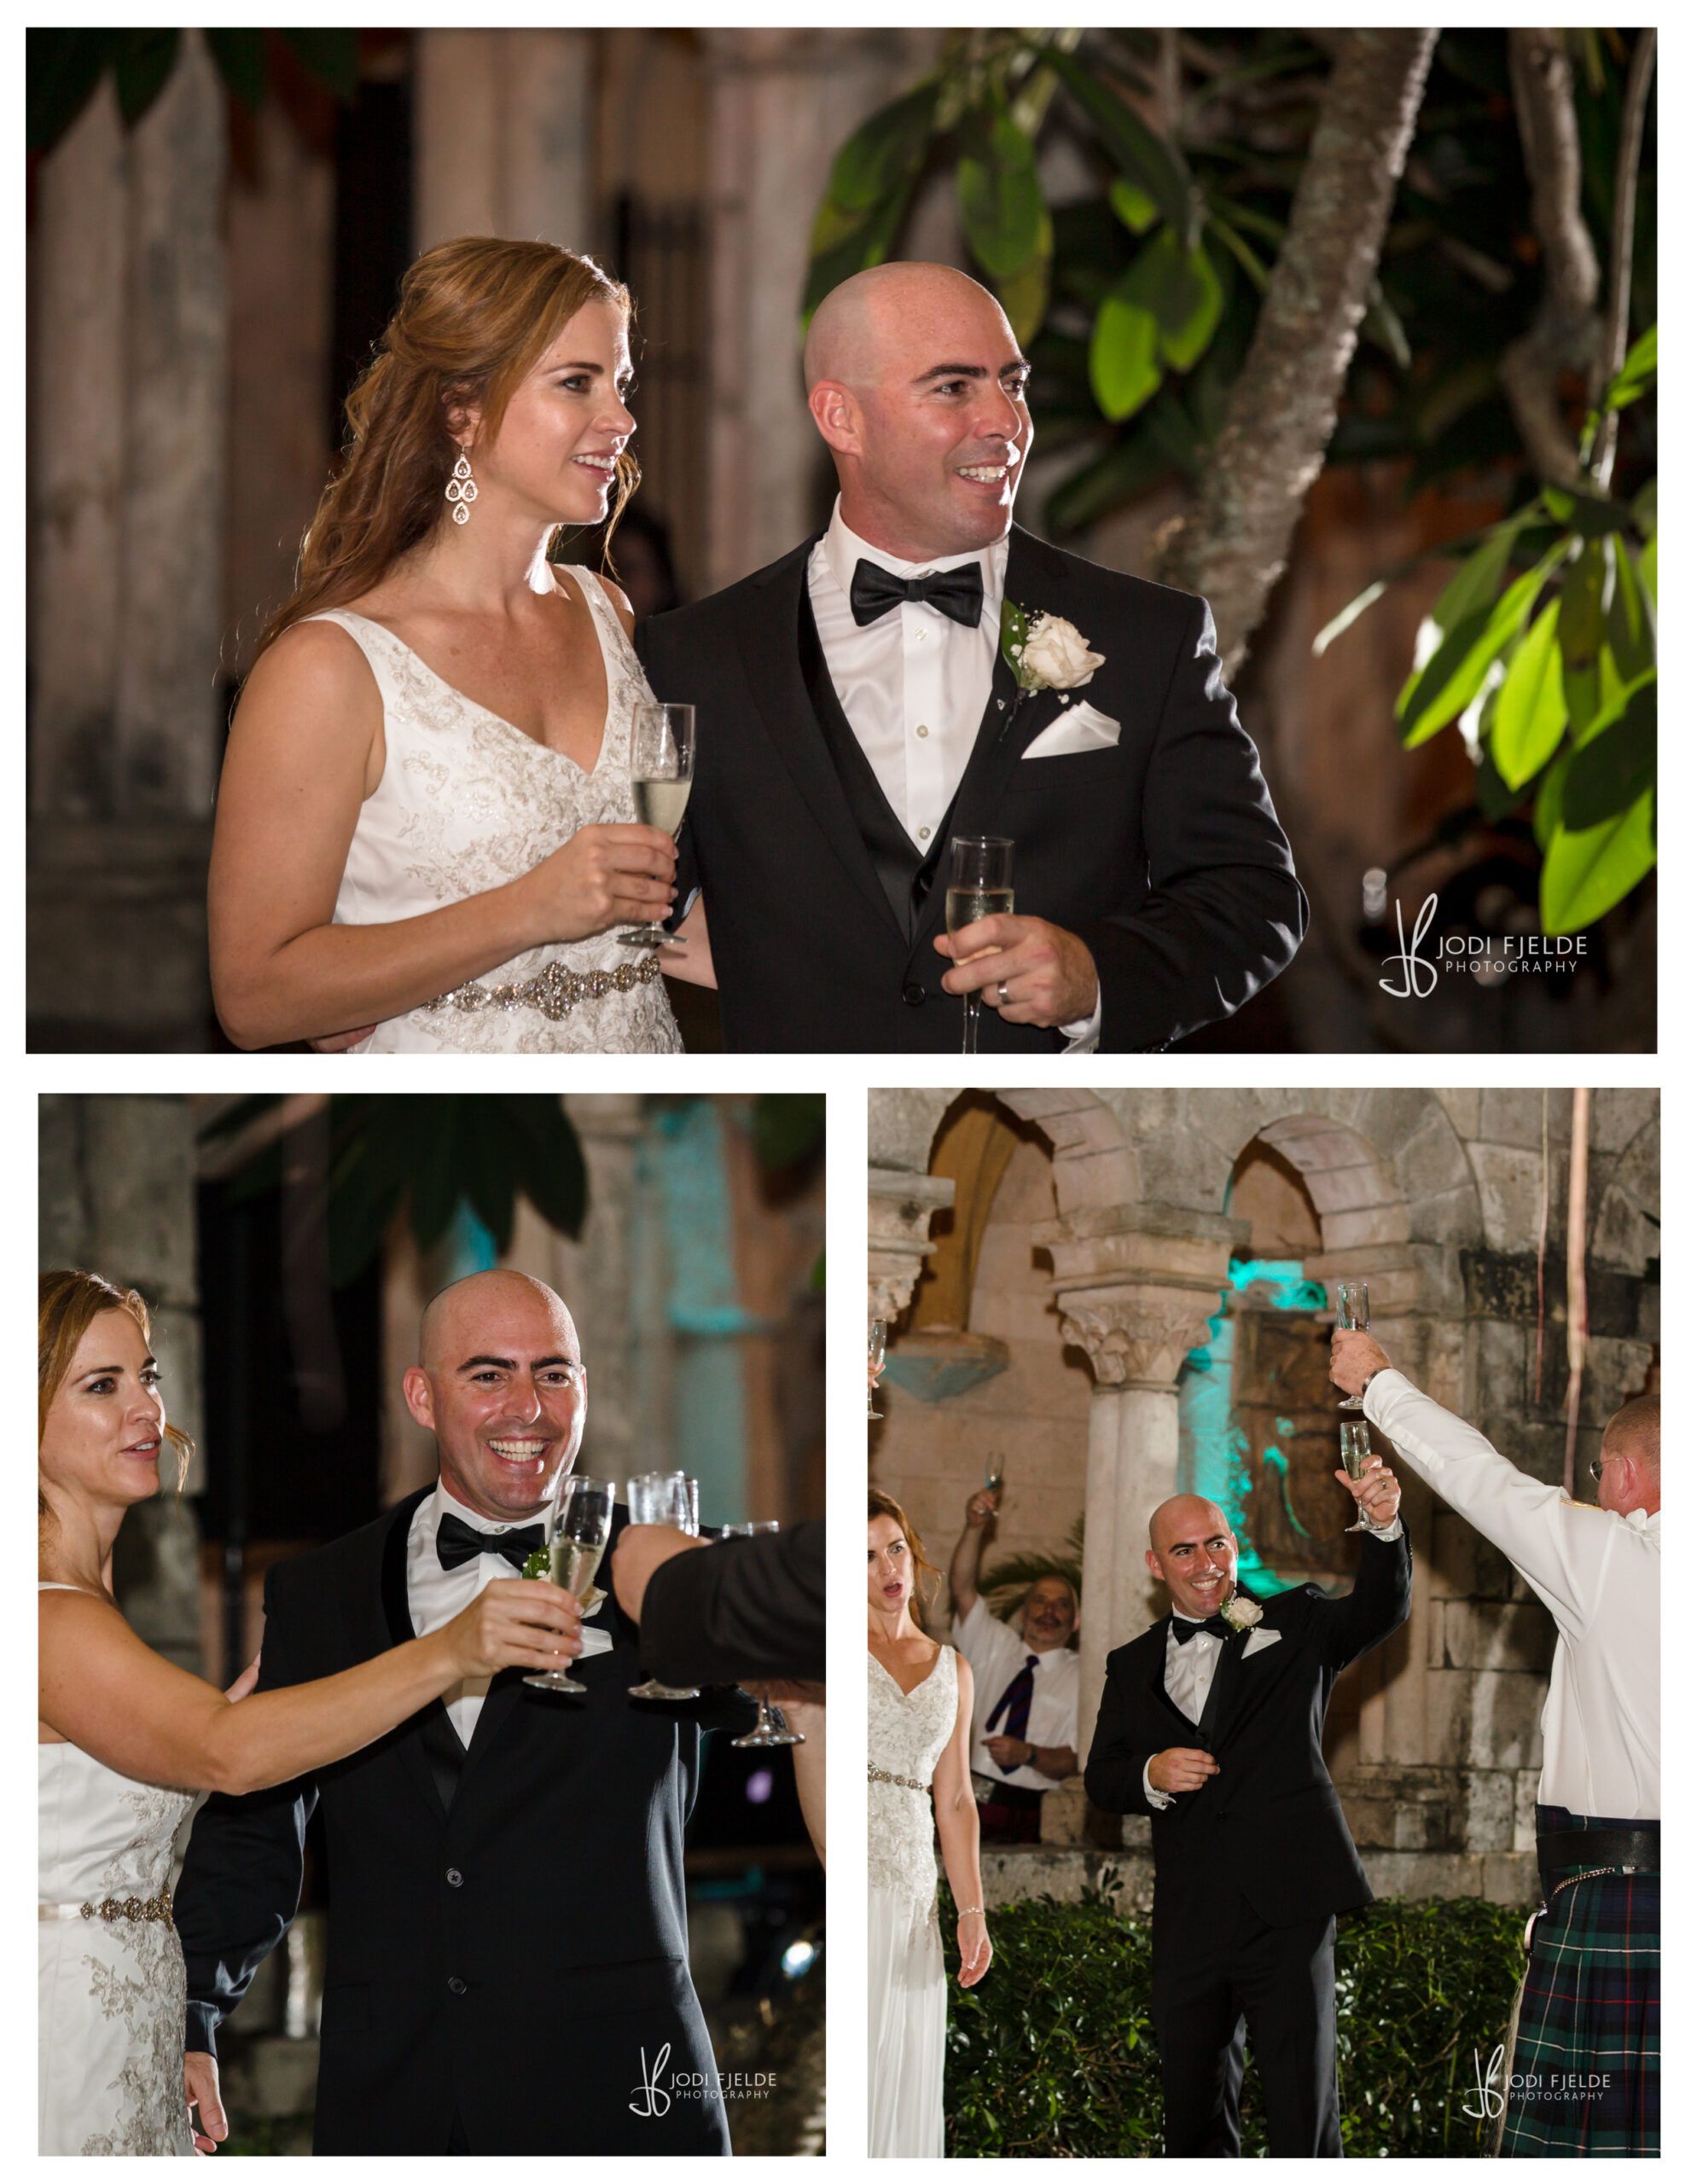 Ancient_Spanish_Monastery_Miami_Florida_wedding_Gio_Iggy_Jodi_Fjelde_Photography_19.jpg